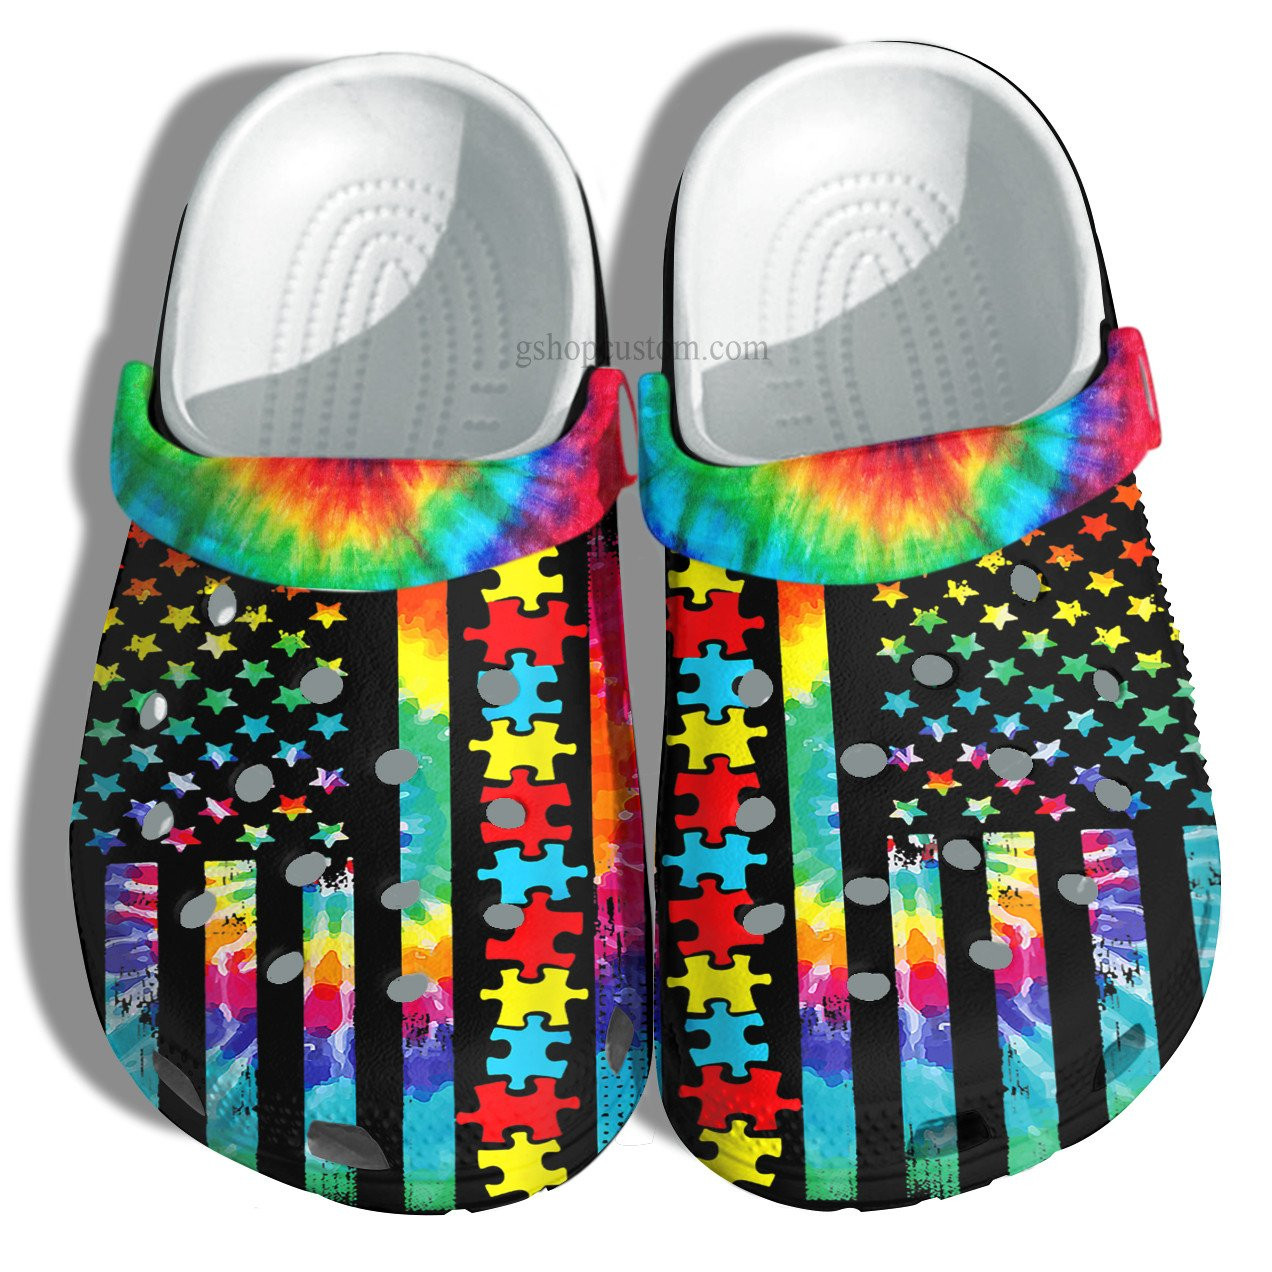 Autism Awareness Usa Flag Puzzle Crocs Shoes Gift For Son Daughter – Hippie America Flag Autism Shoes Croc Clogs